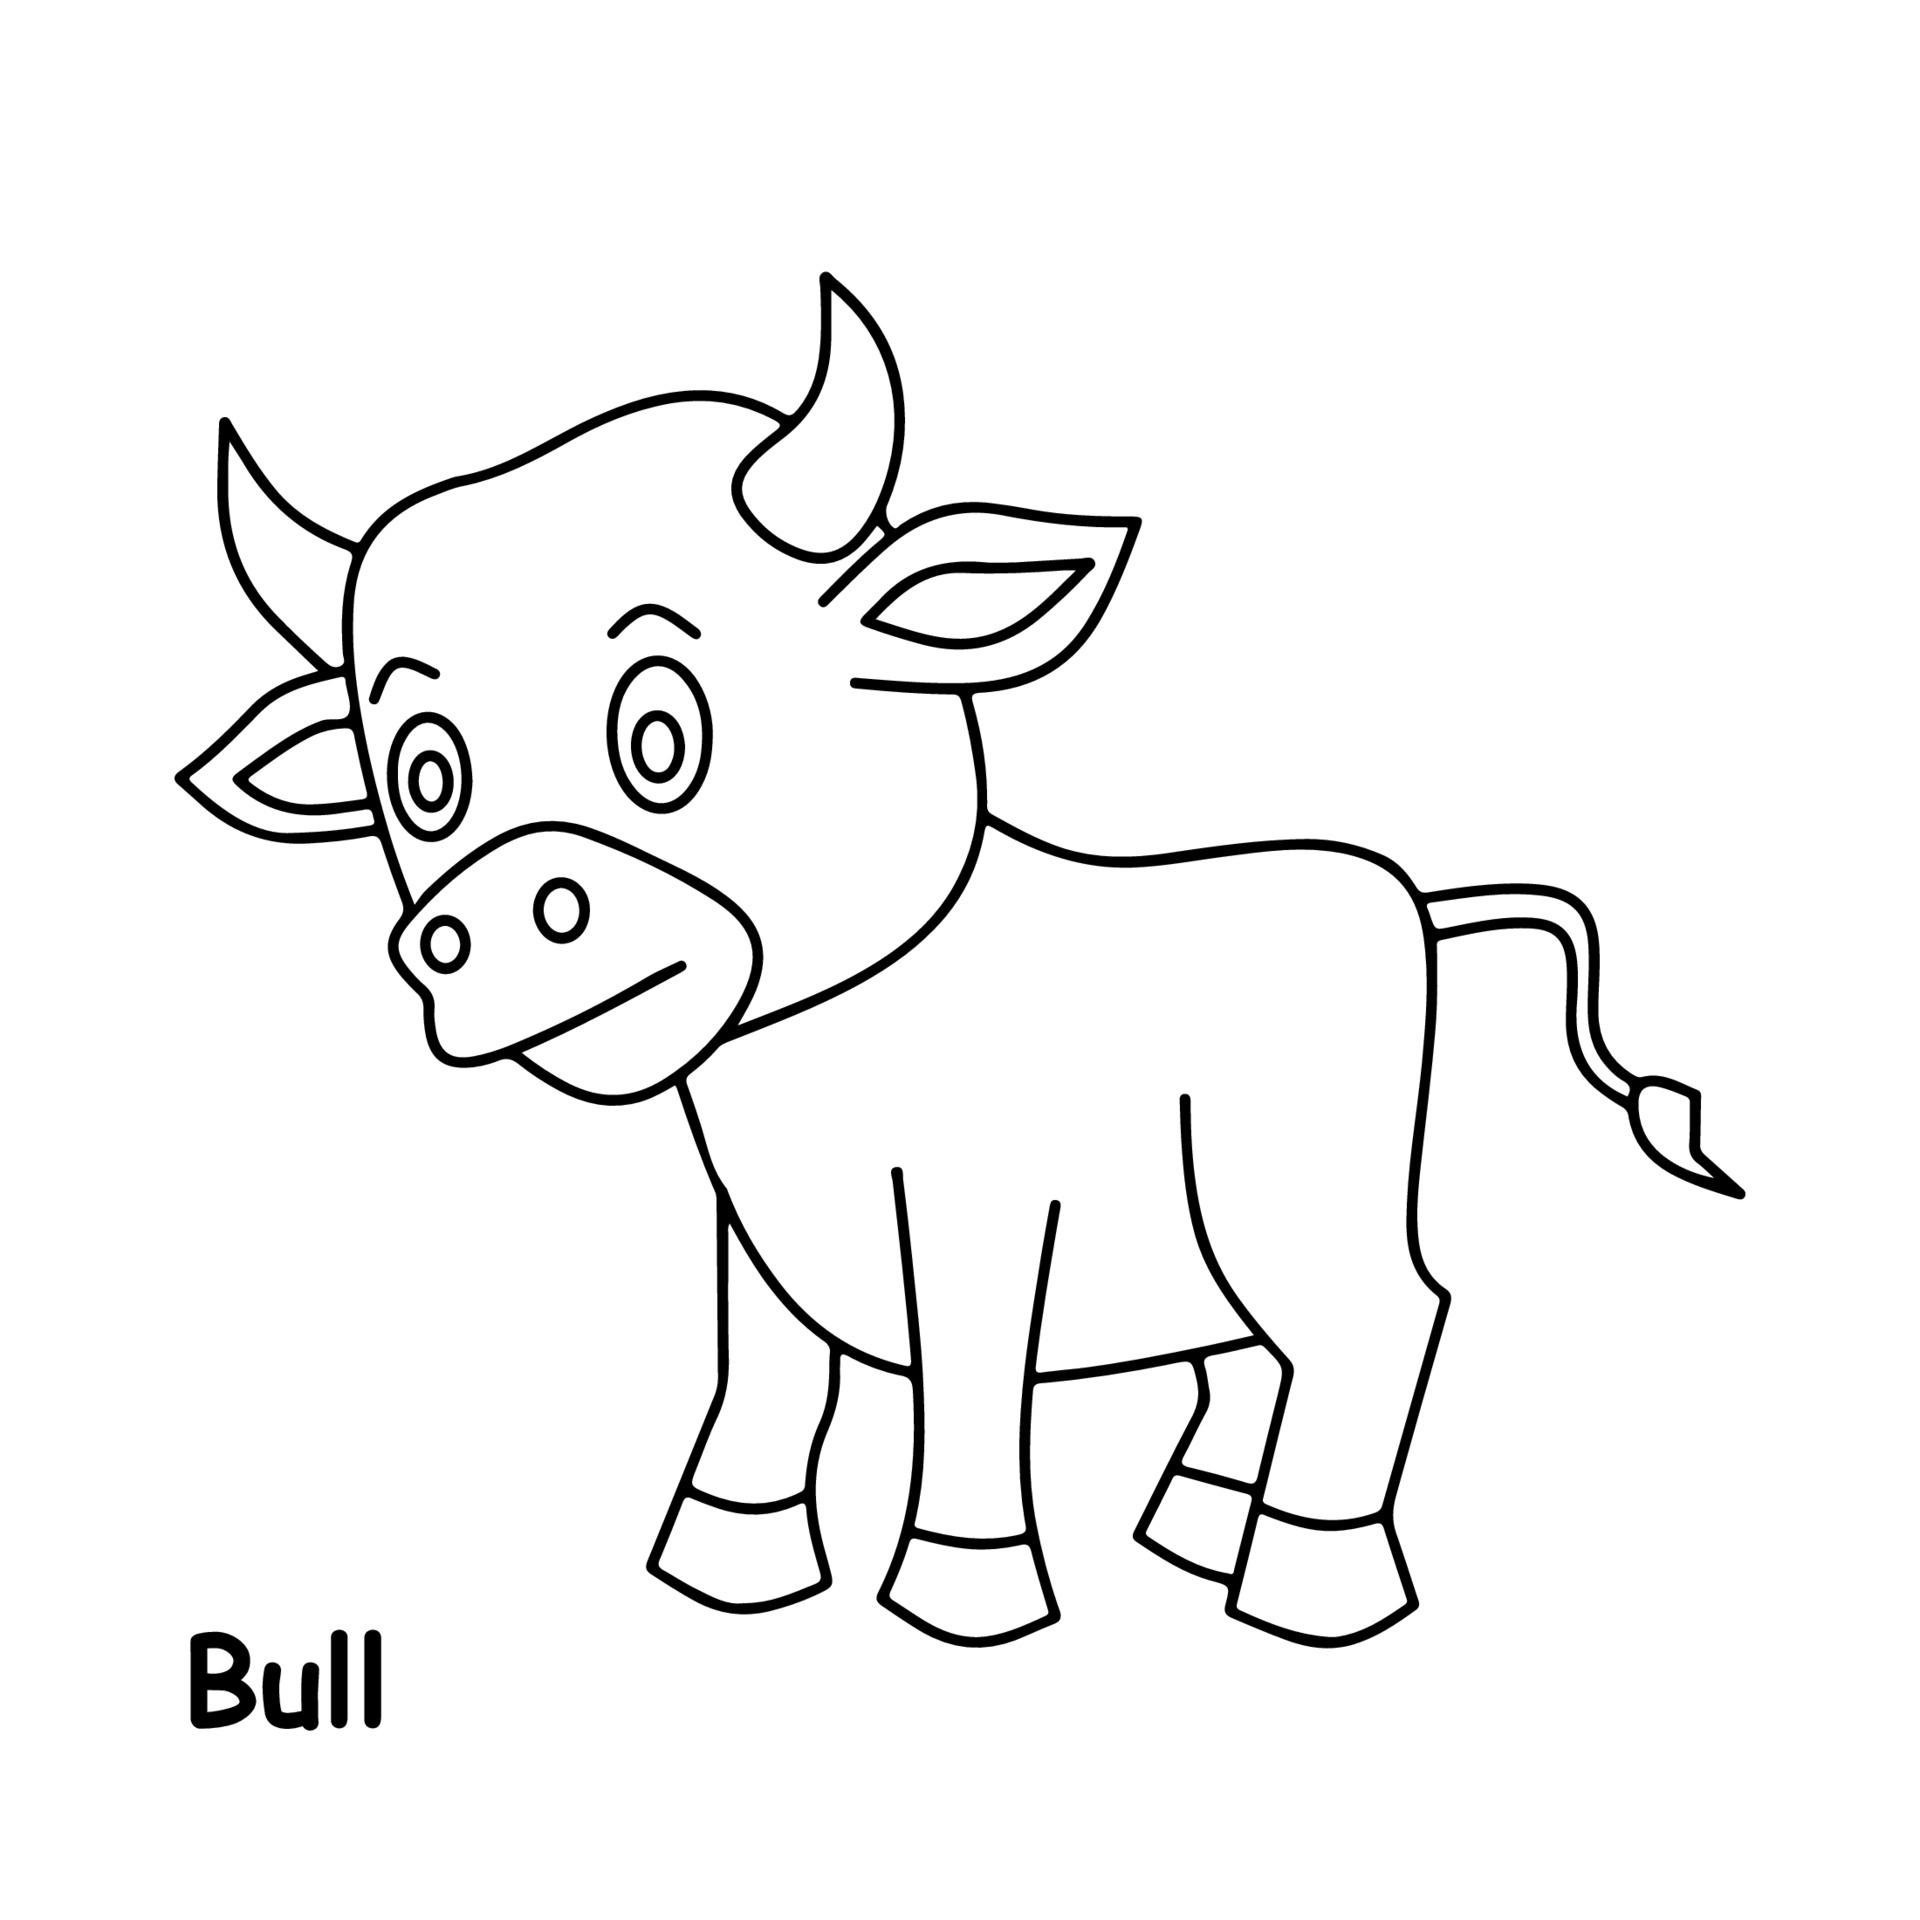 Bull Drawing Hand drawn